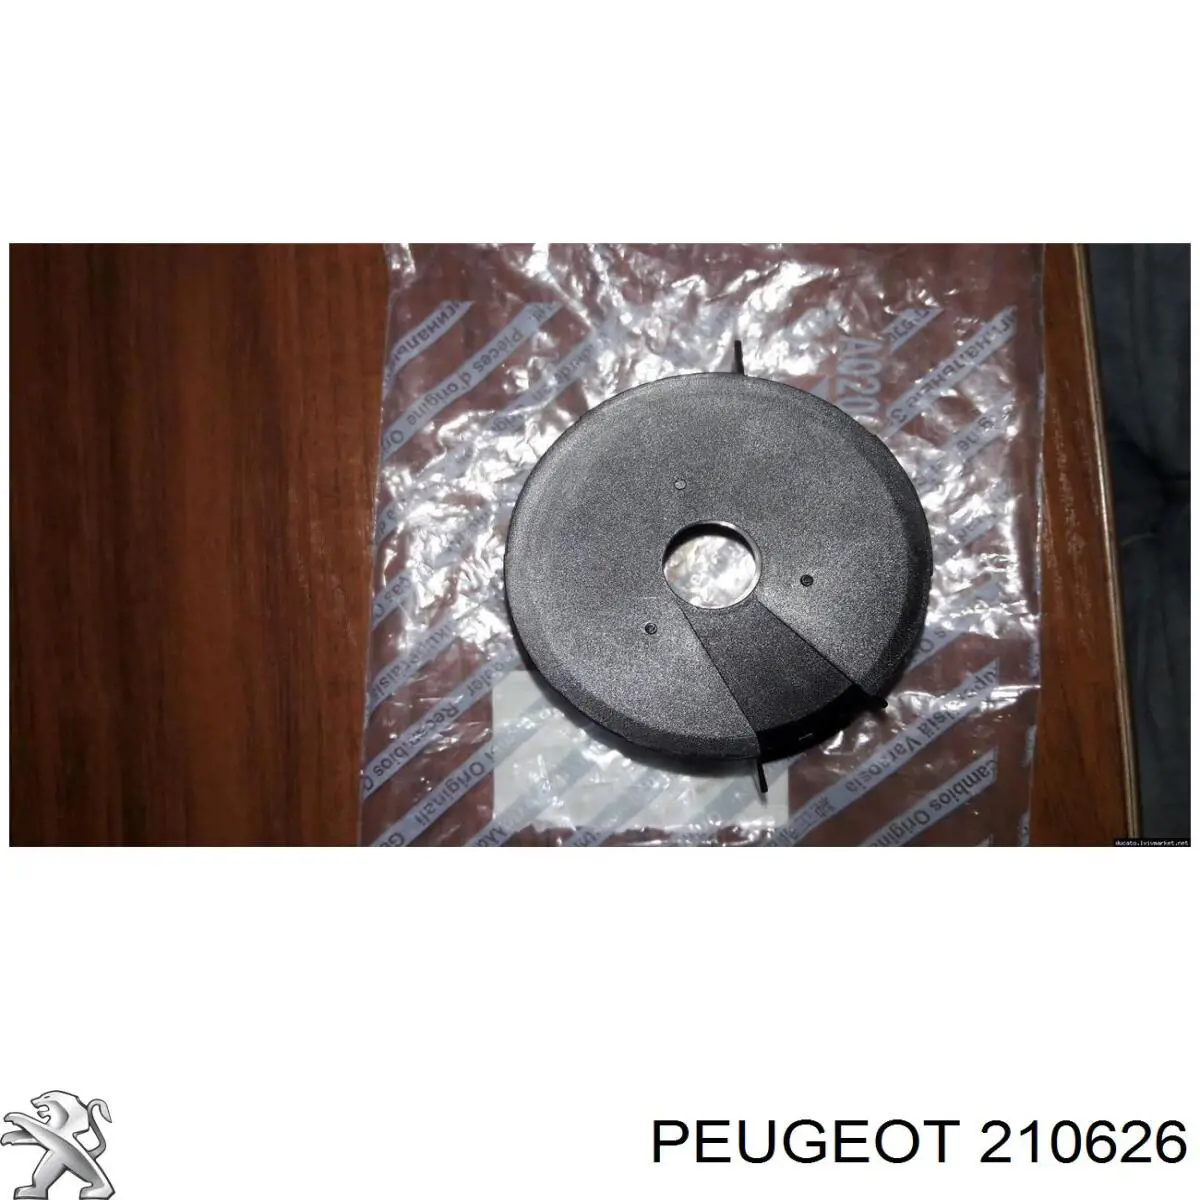 Arbol (Eje) Secundario para Caja de Cambios 210626 Peugeot/Citroen